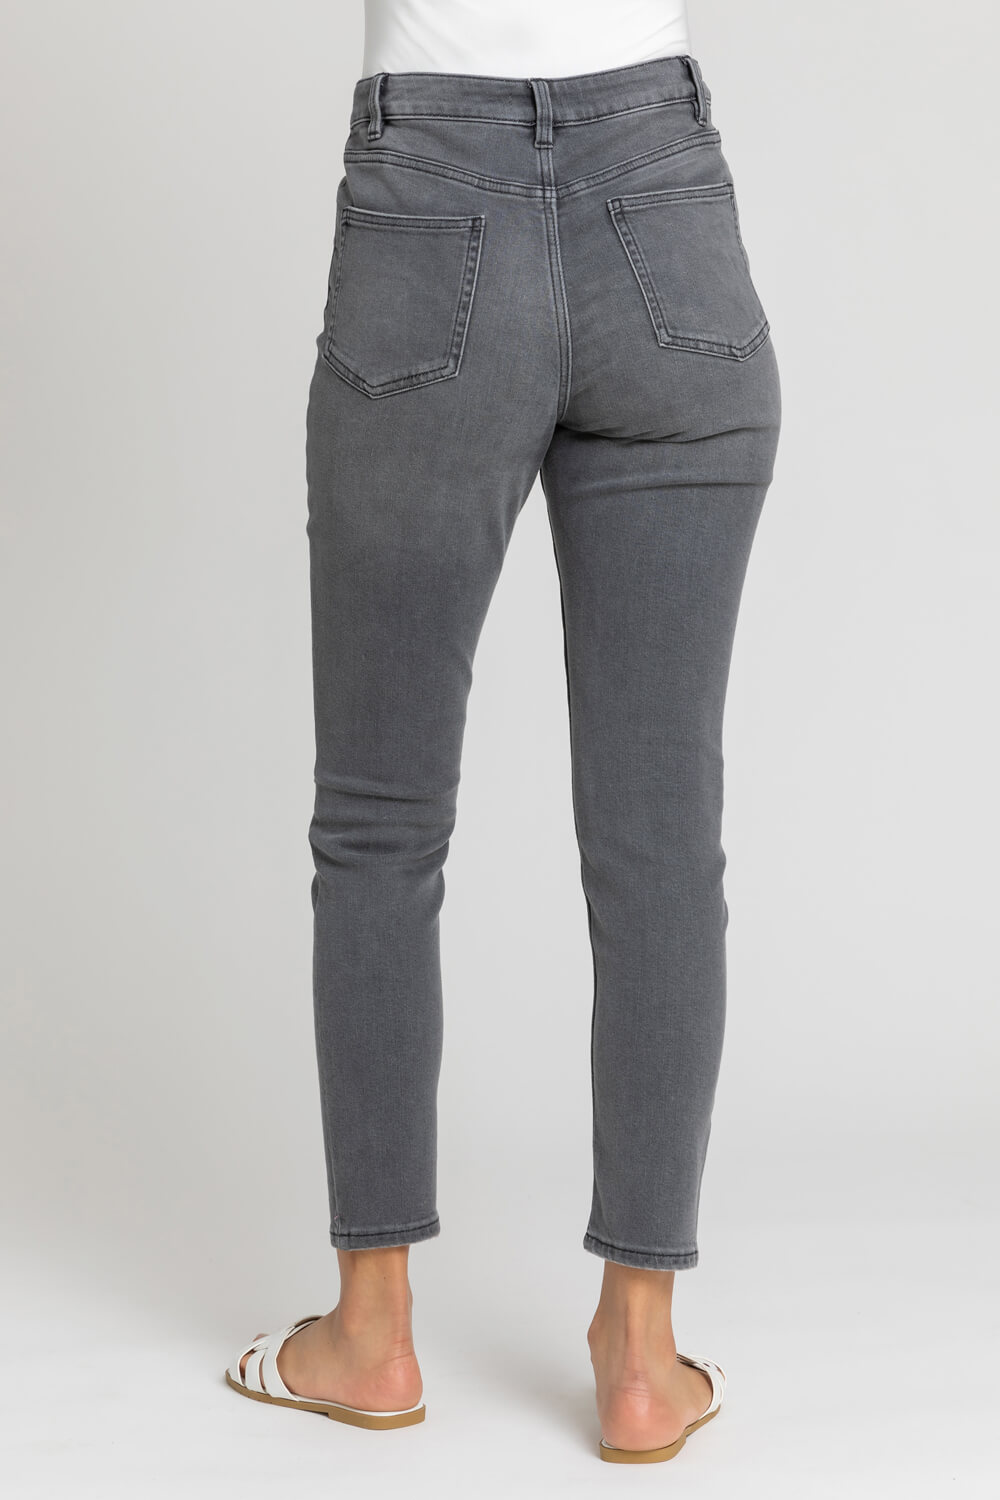 Ripped Stretch Skinny Jeans in Grey - Roman Originals UK